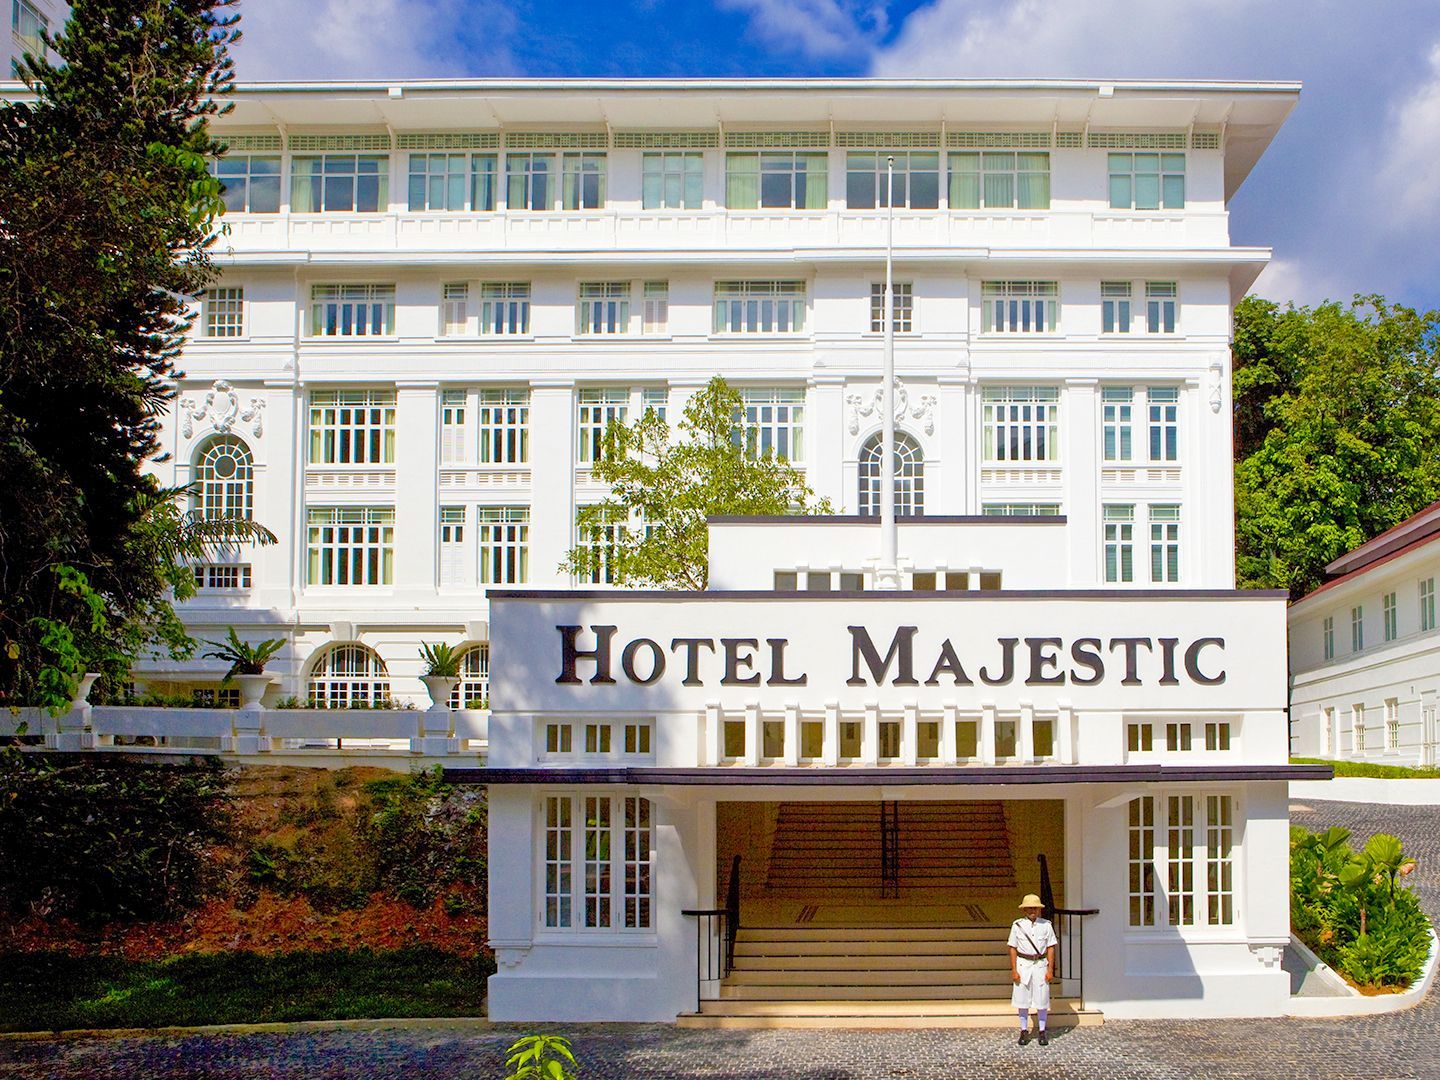 Hotel Majestic.jpg